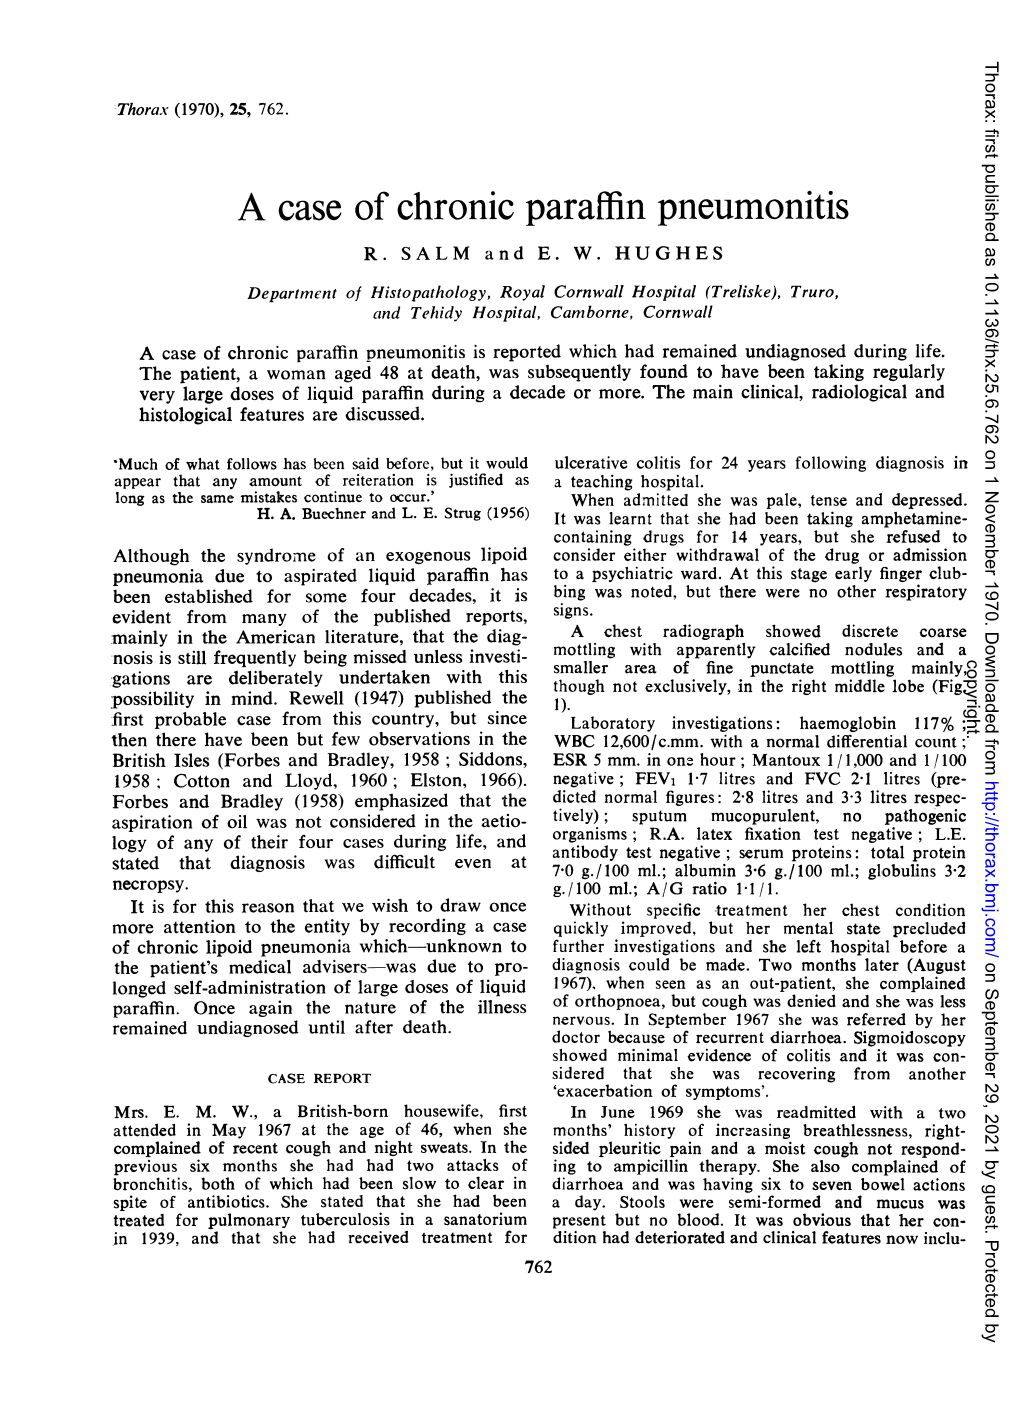 A Case of Chronic Paraffin Pneumonitis R